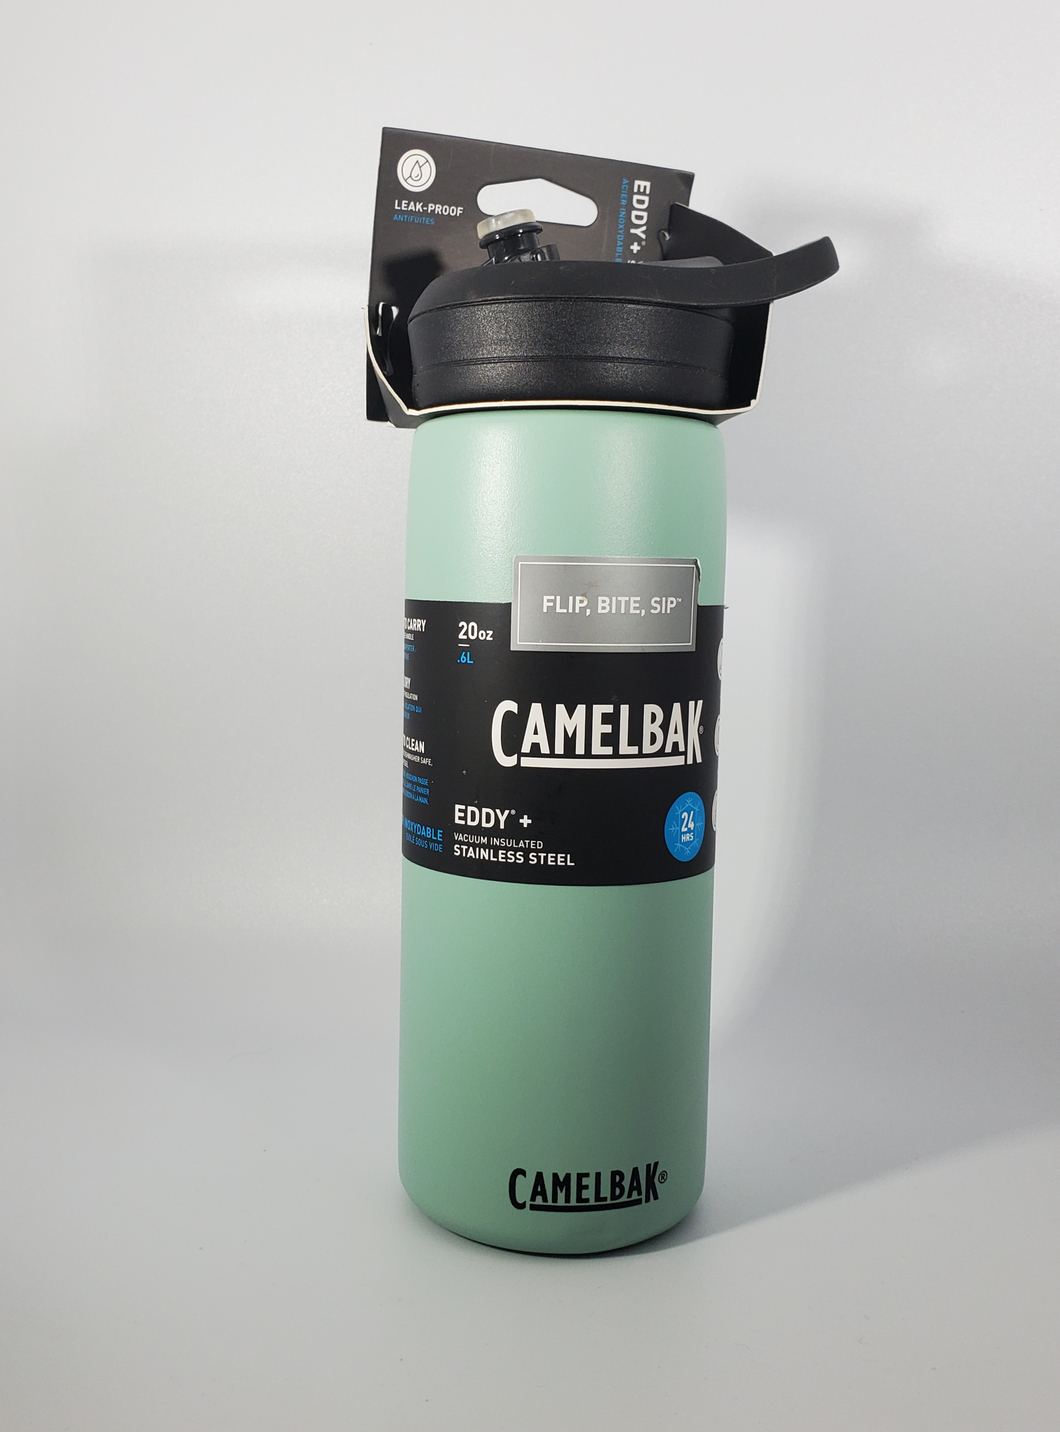 CamelBak Stainless Steel Eddy+ Insulated Water Bottle - 20 fl. oz. Seafoam